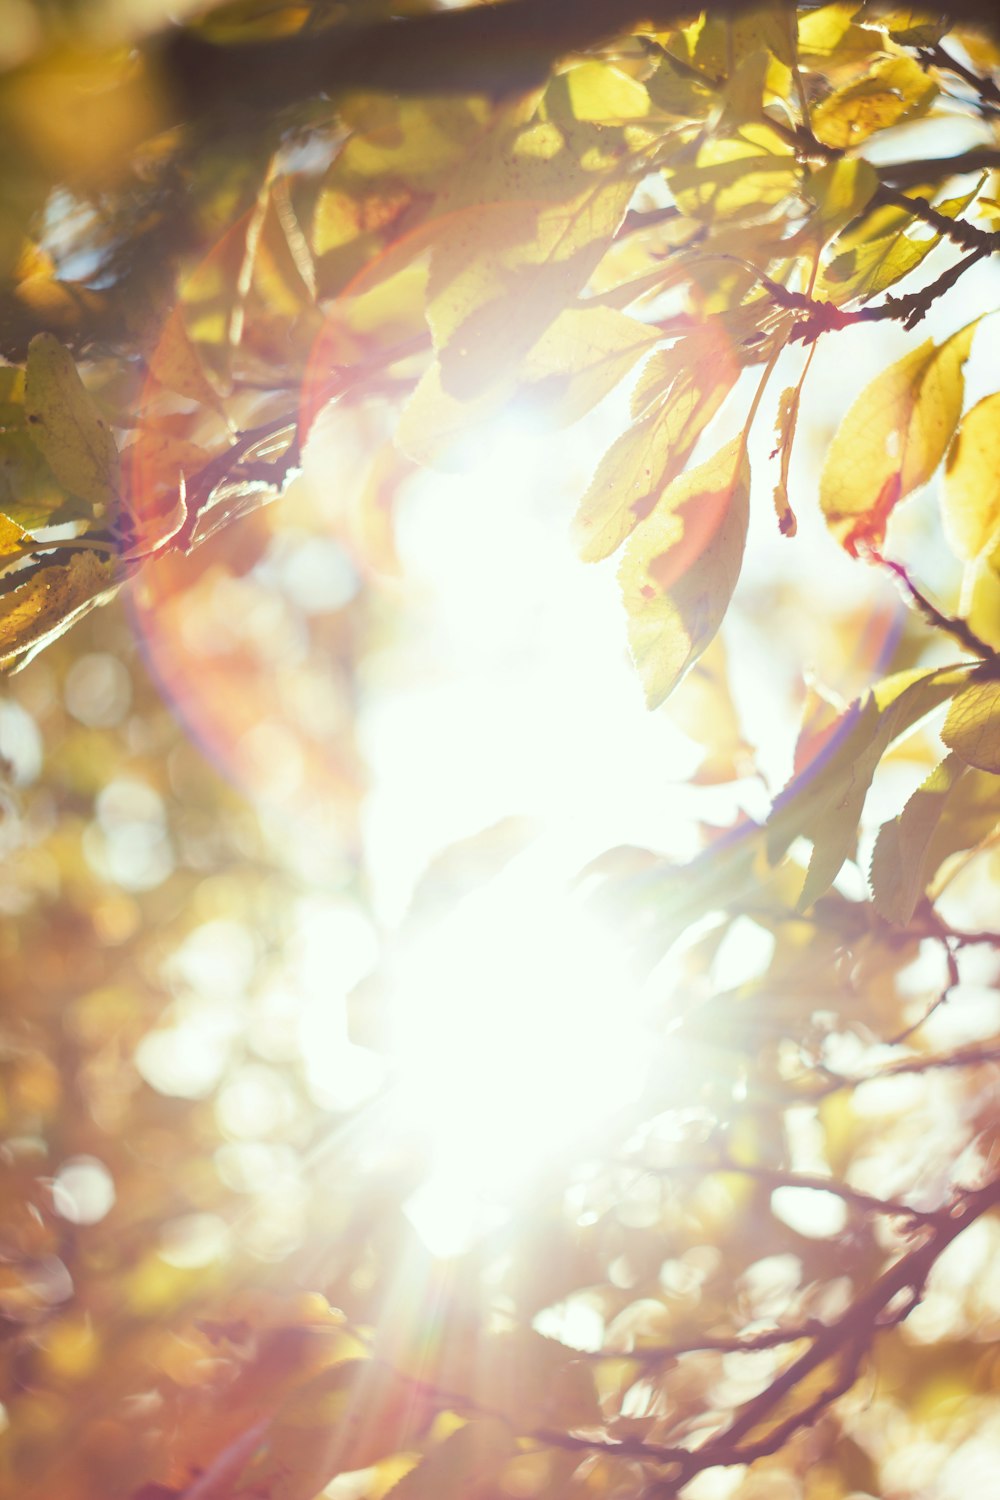 sun shining through leaves